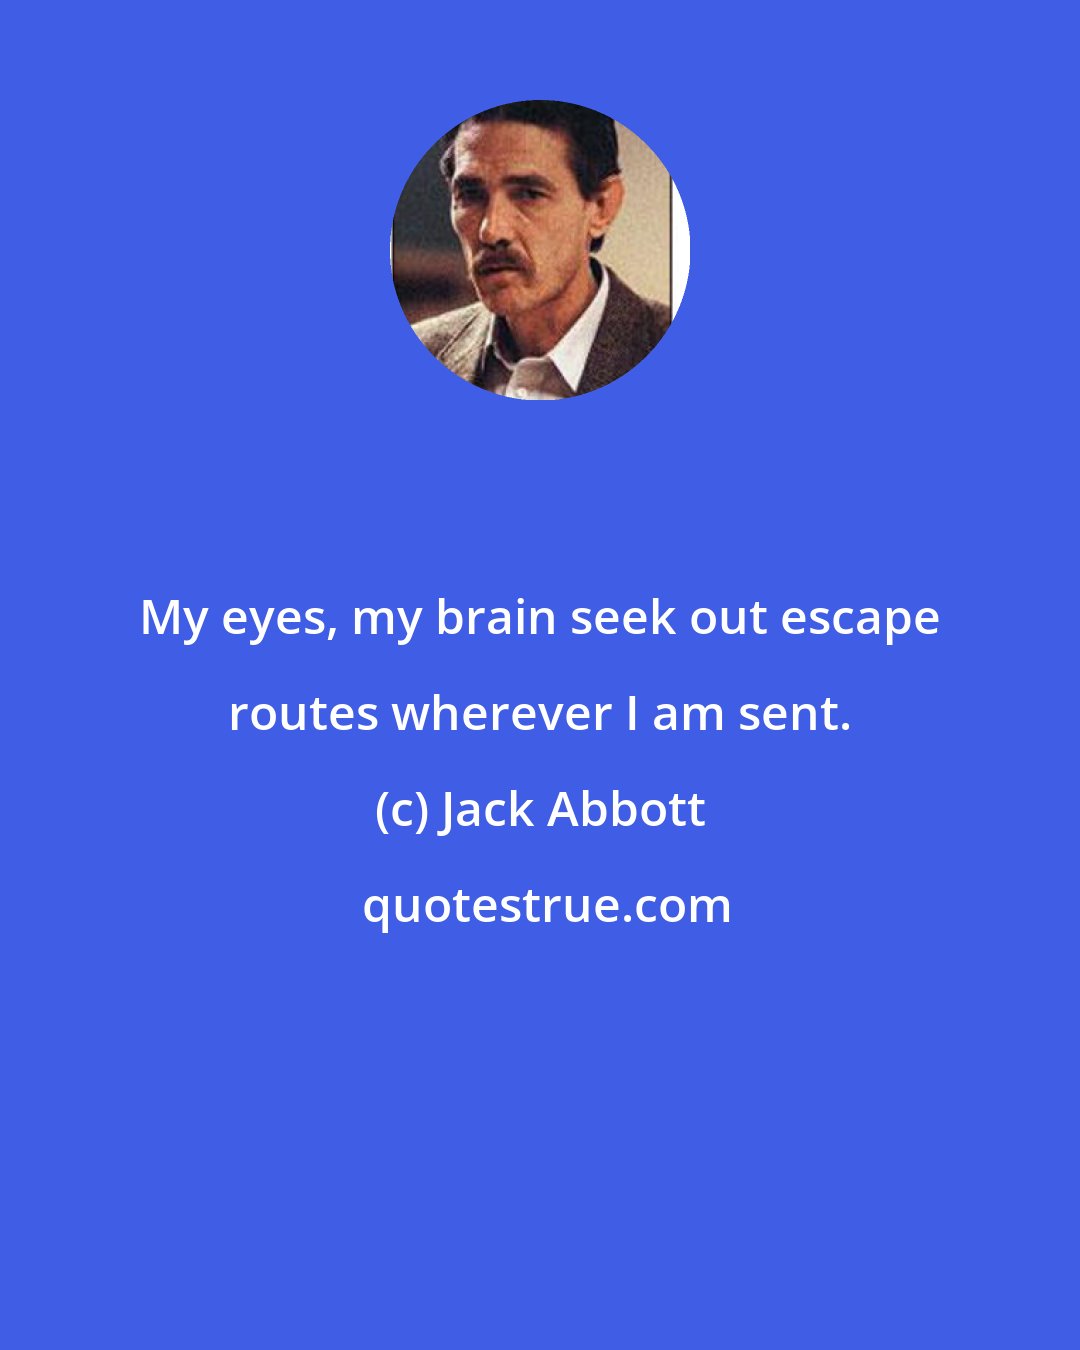 Jack Abbott: My eyes, my brain seek out escape routes wherever I am sent.